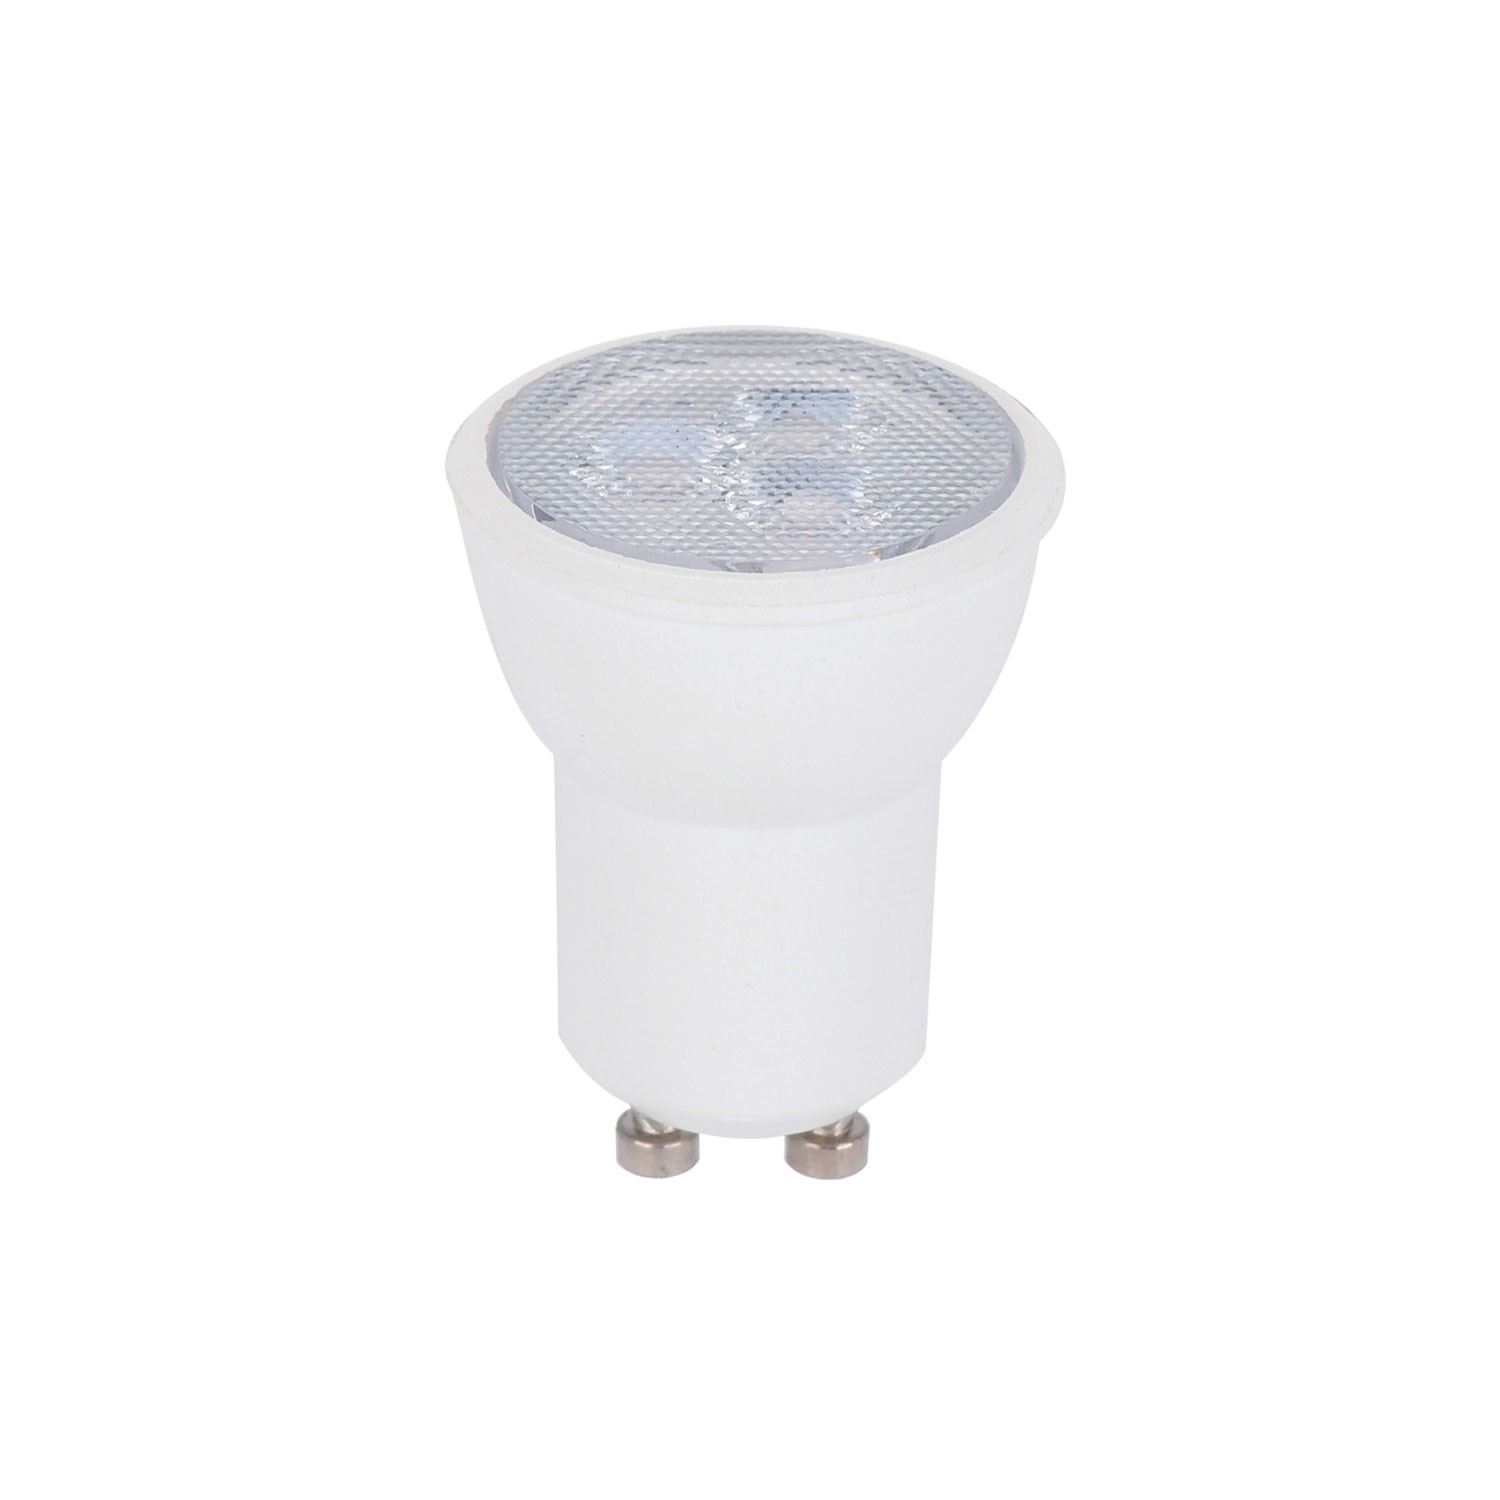 Fermaluce Flex 30 Pastel Lamp with mini rose with switch and mini spotlight GU1d0